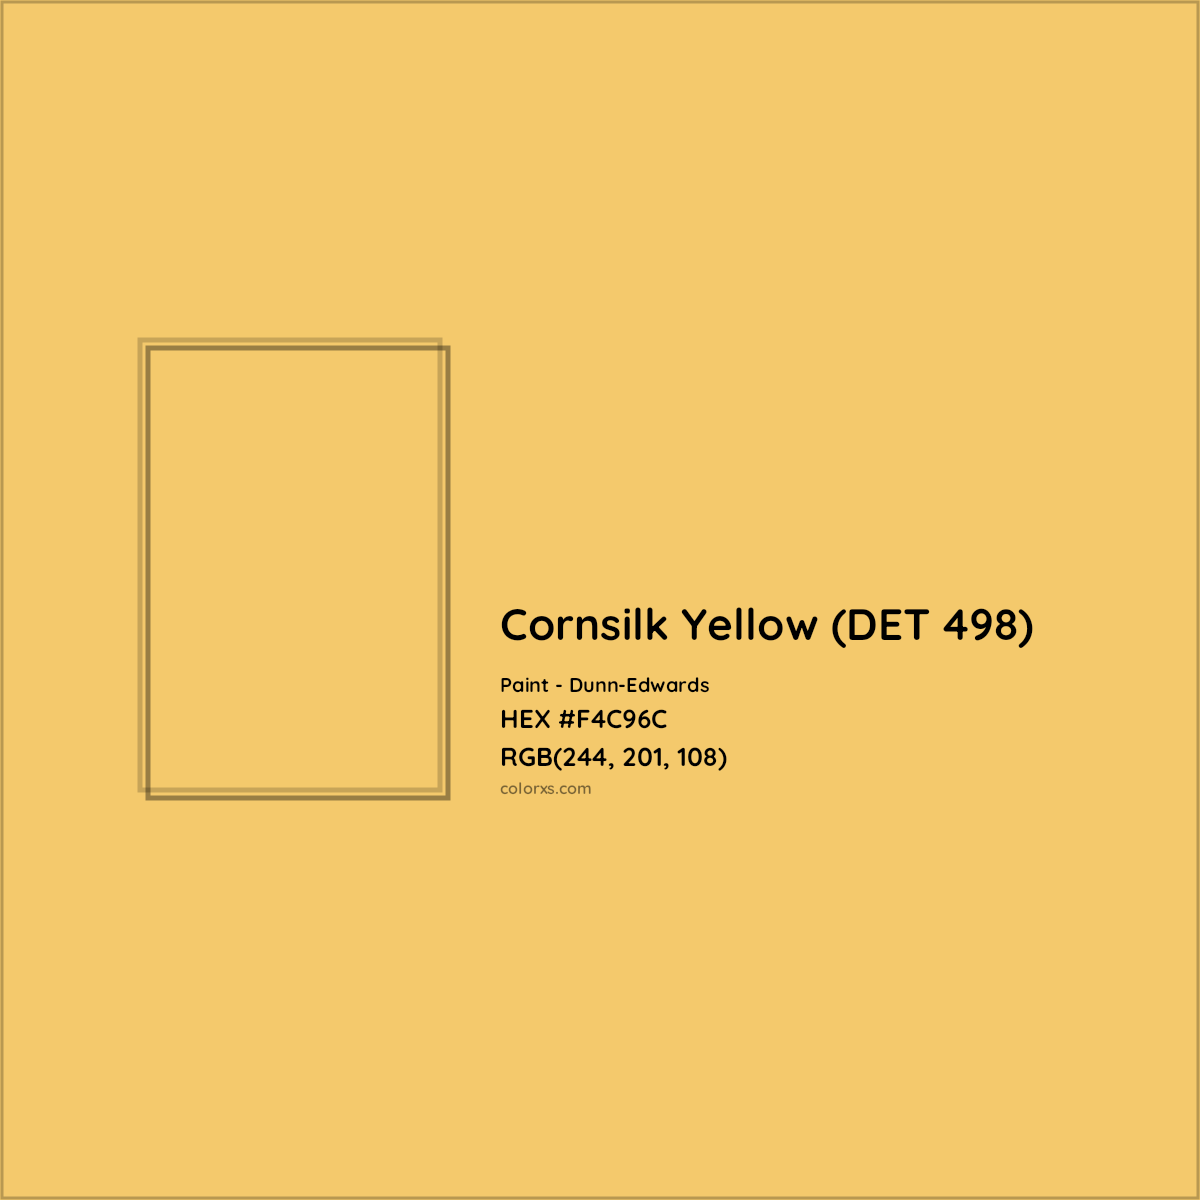 HEX #F4C96C Cornsilk Yellow (DET 498) Paint Dunn-Edwards - Color Code